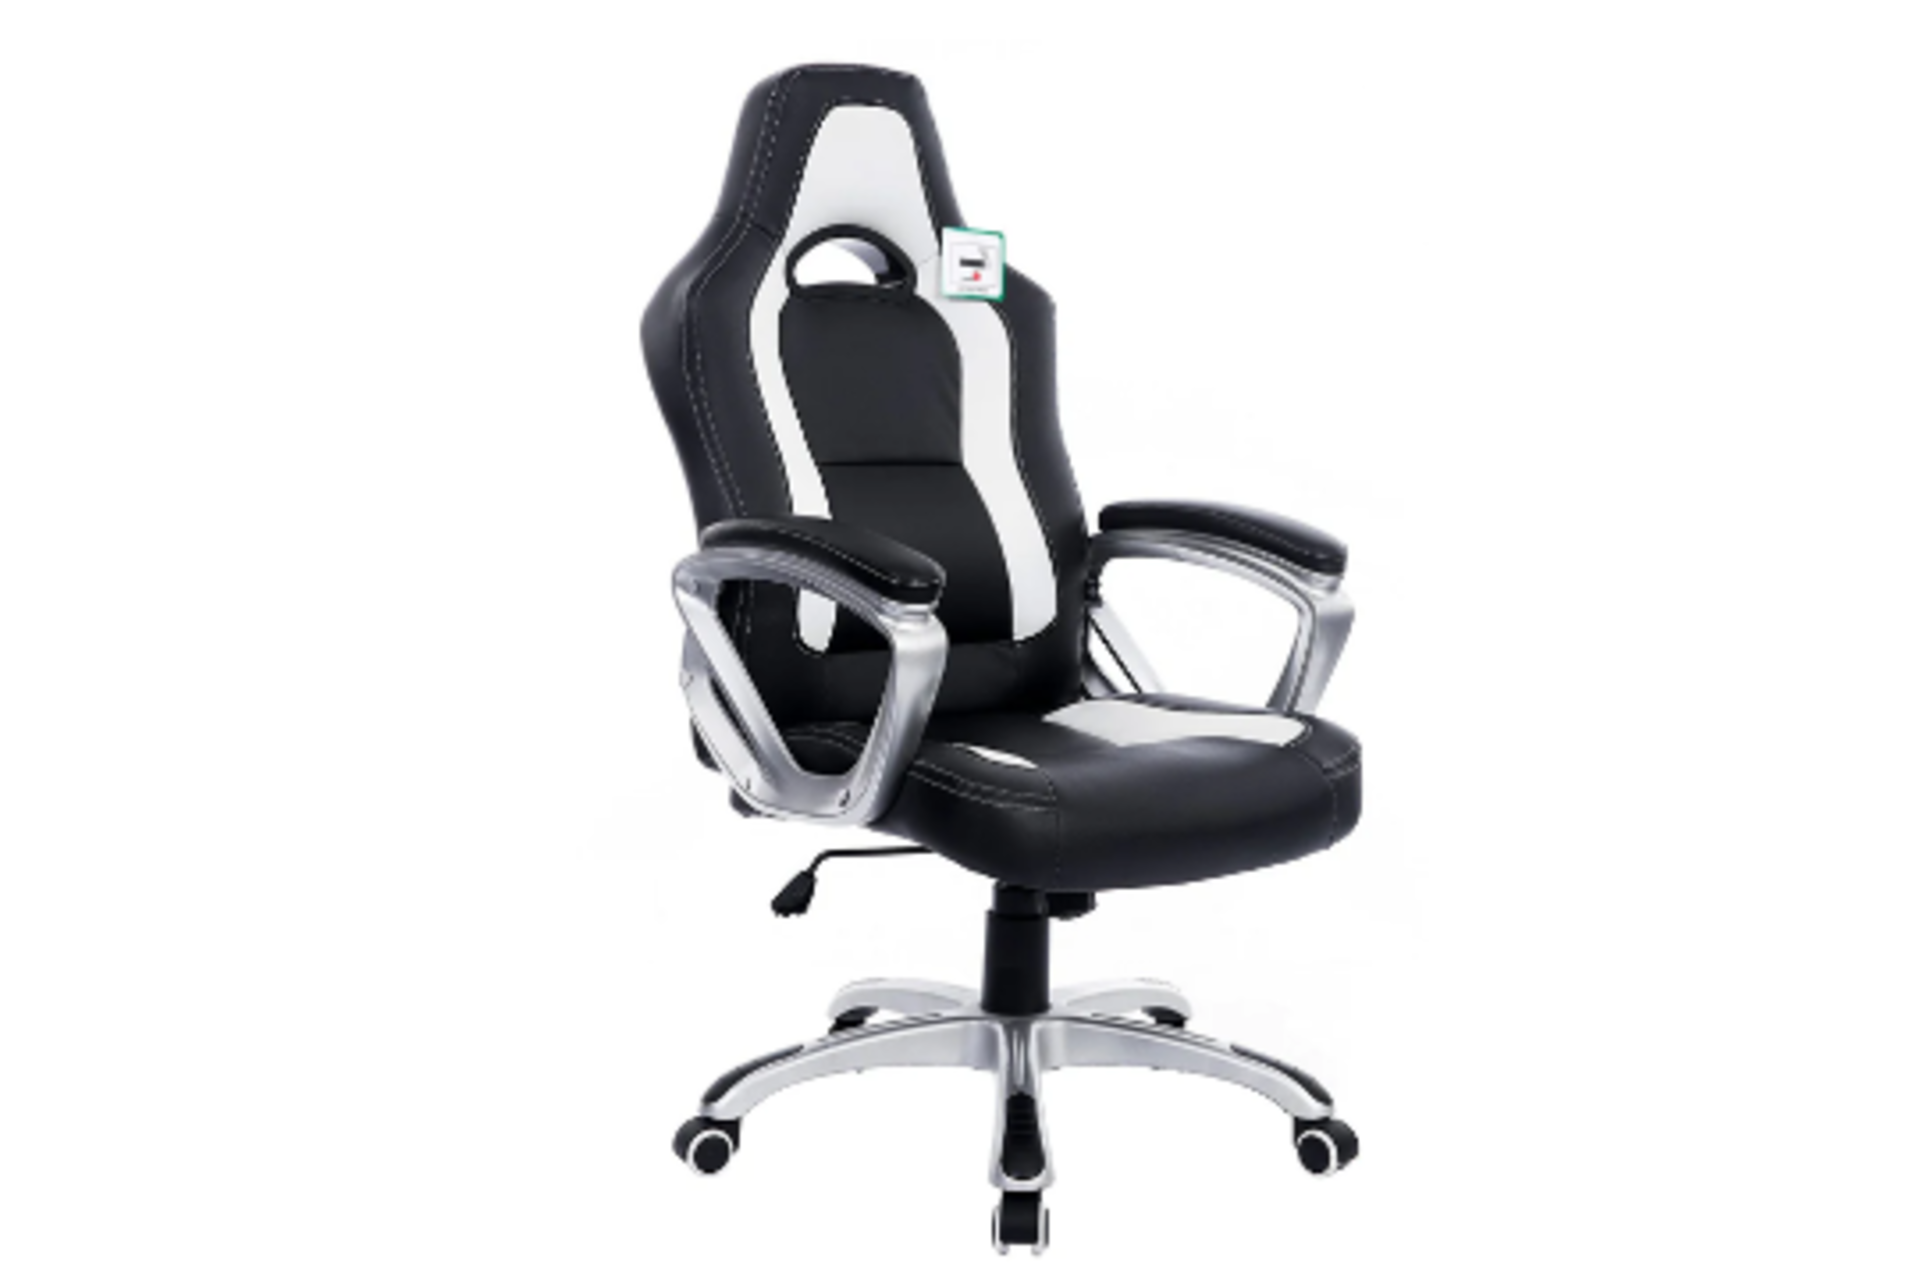 DaAls Racing Sport Swivel Office Chair in Black & White. RRP £149.99. - SR4. Brand new design racing